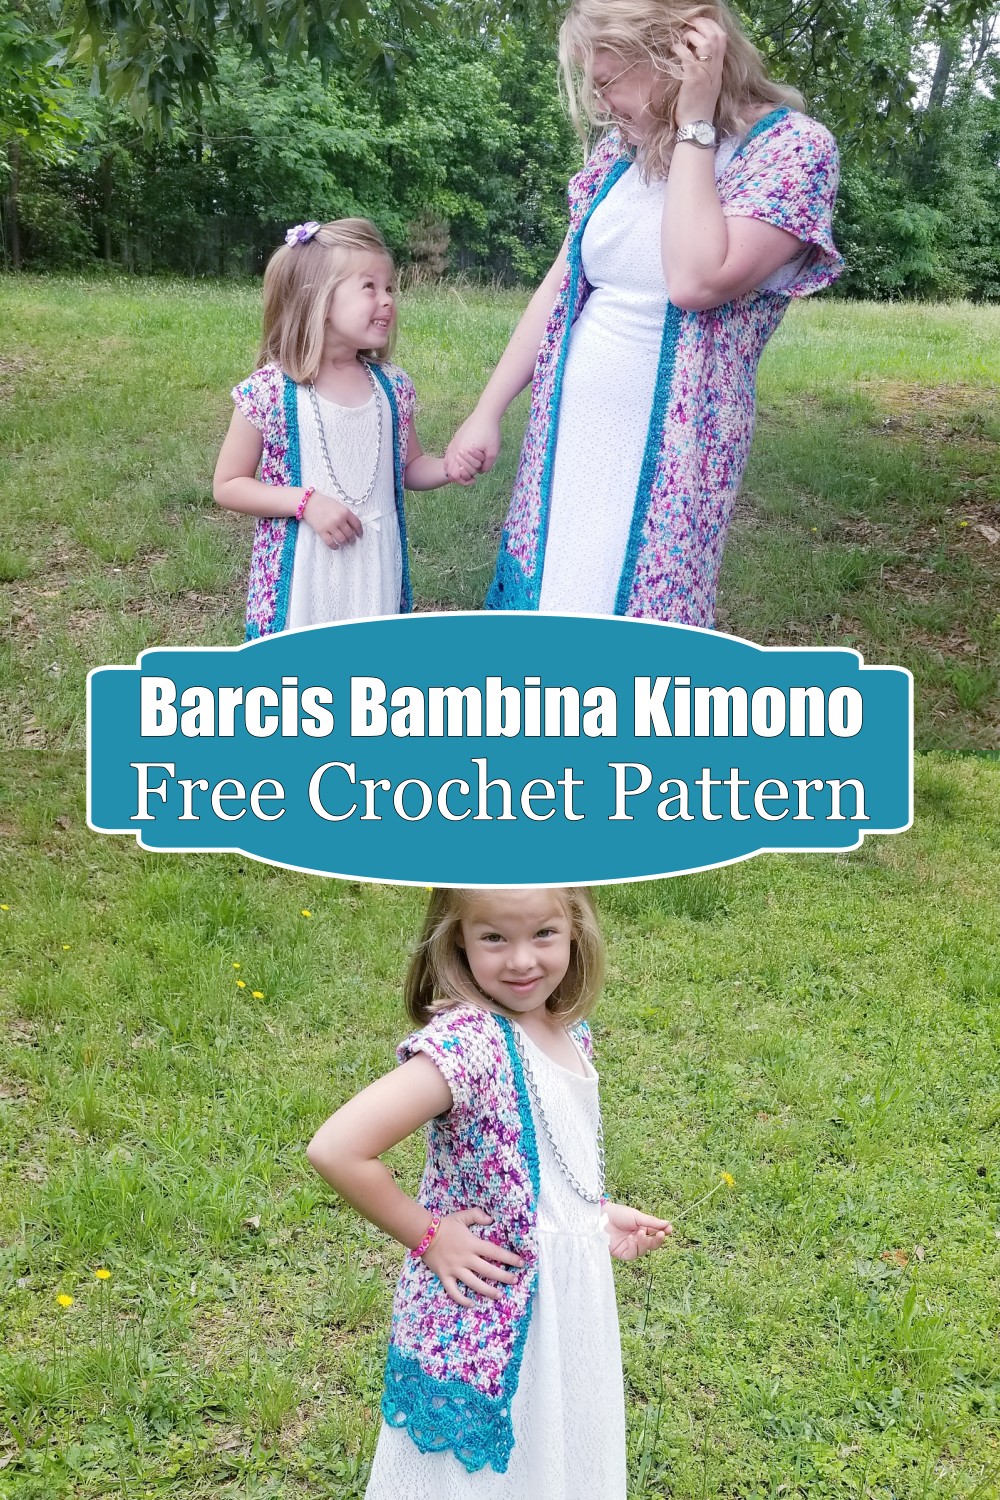 Barcis Bambina Kimono